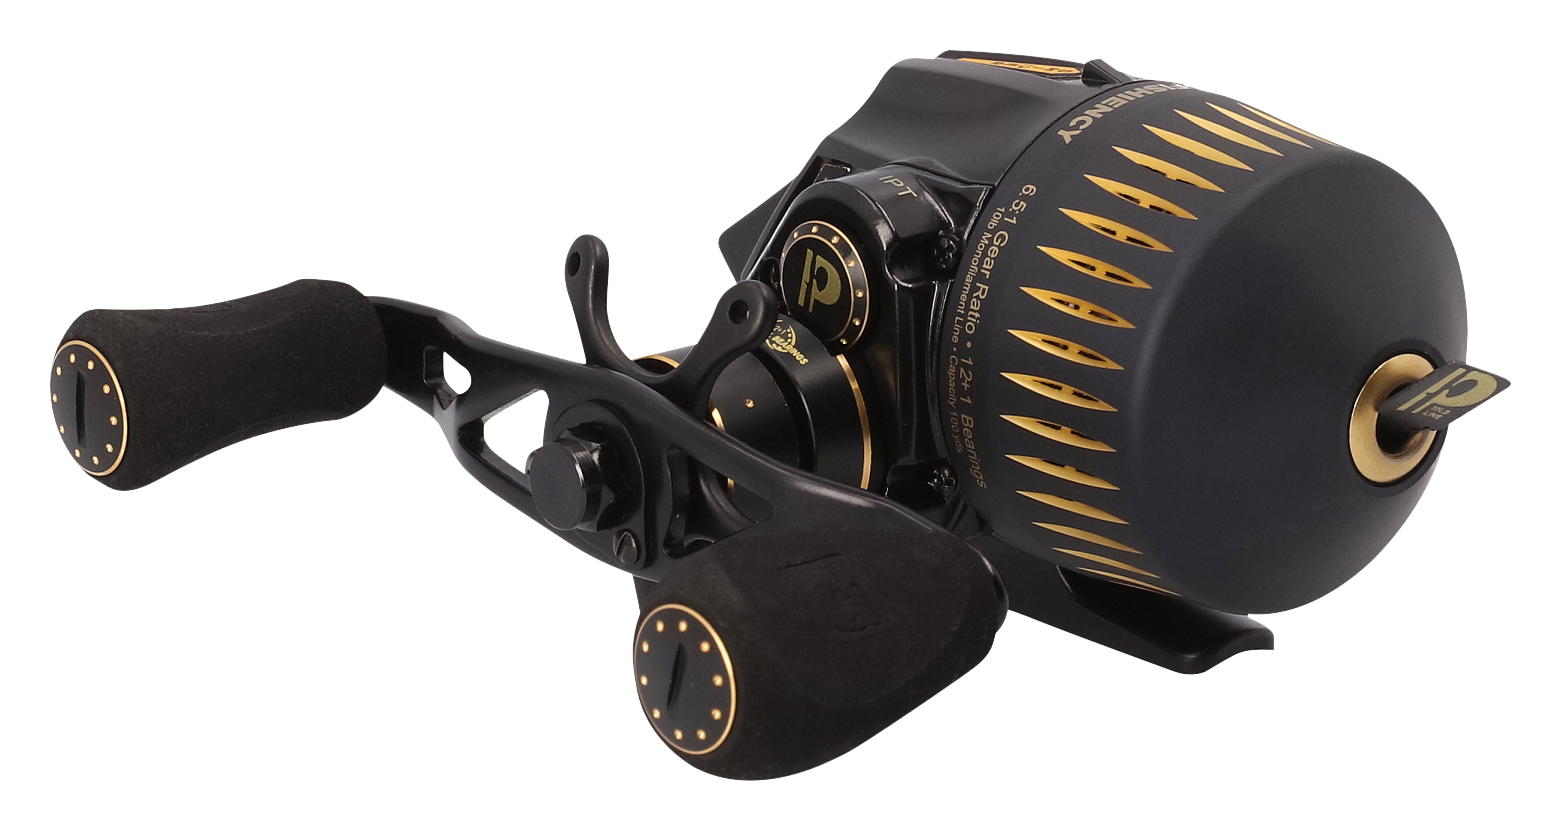 Sniper Economy Spincast Reel Black/Silver Clam Pack | Profishiency